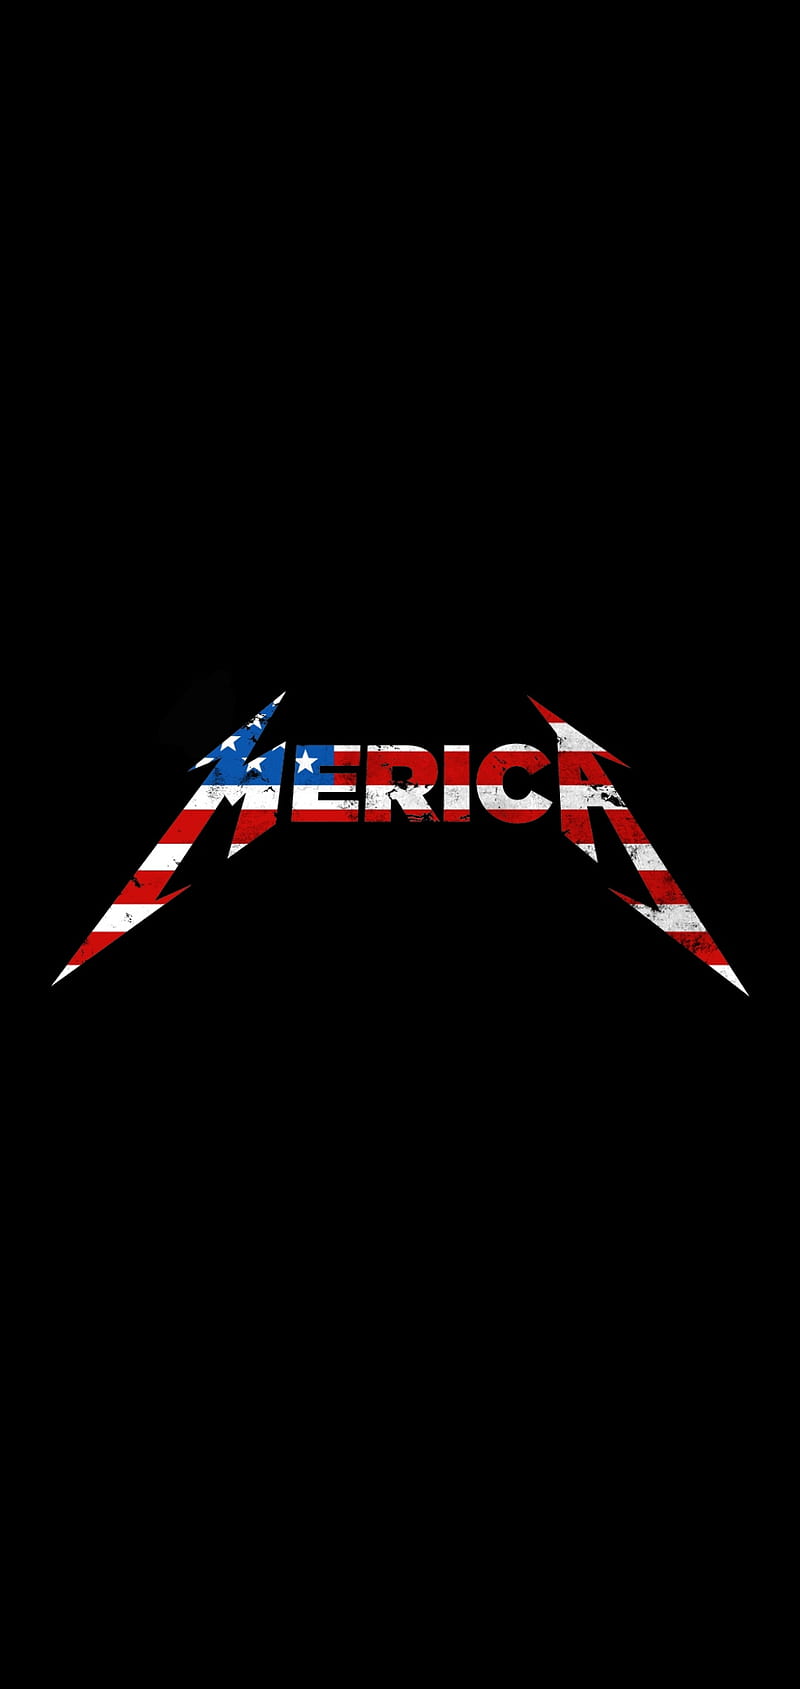 Metallica Logo - ref.metallica-logo